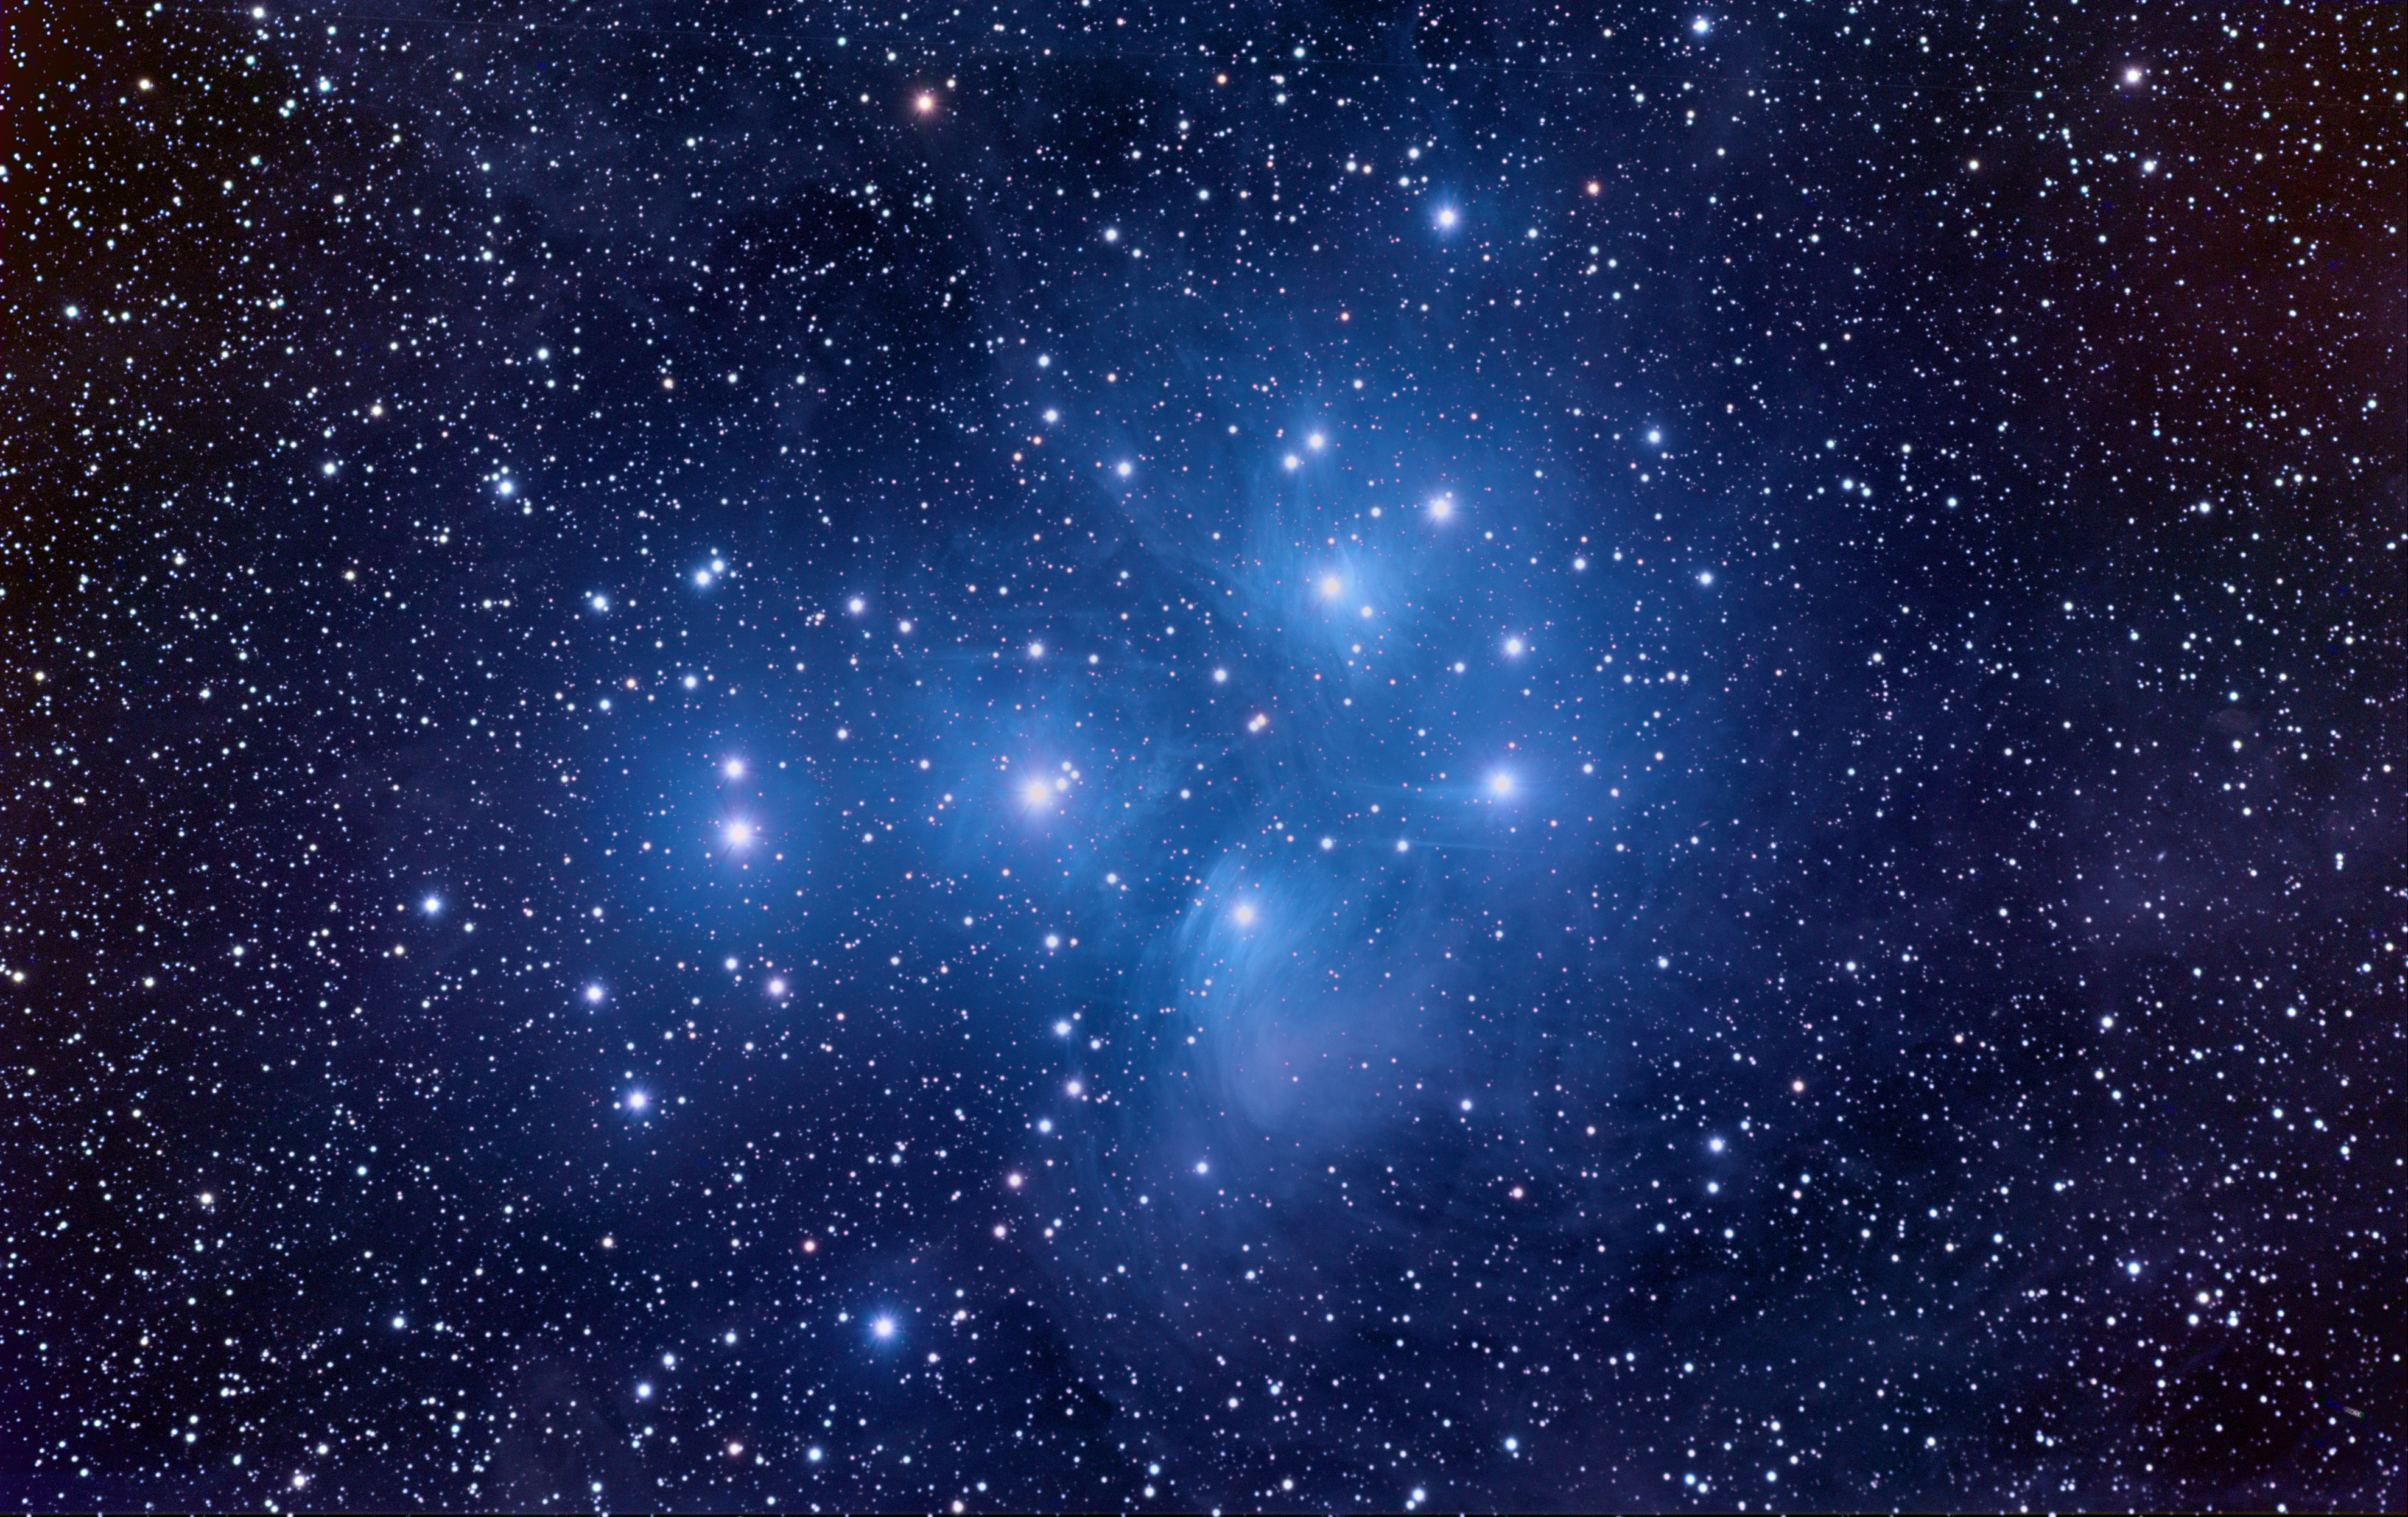 pleiades star cluster wallpaper